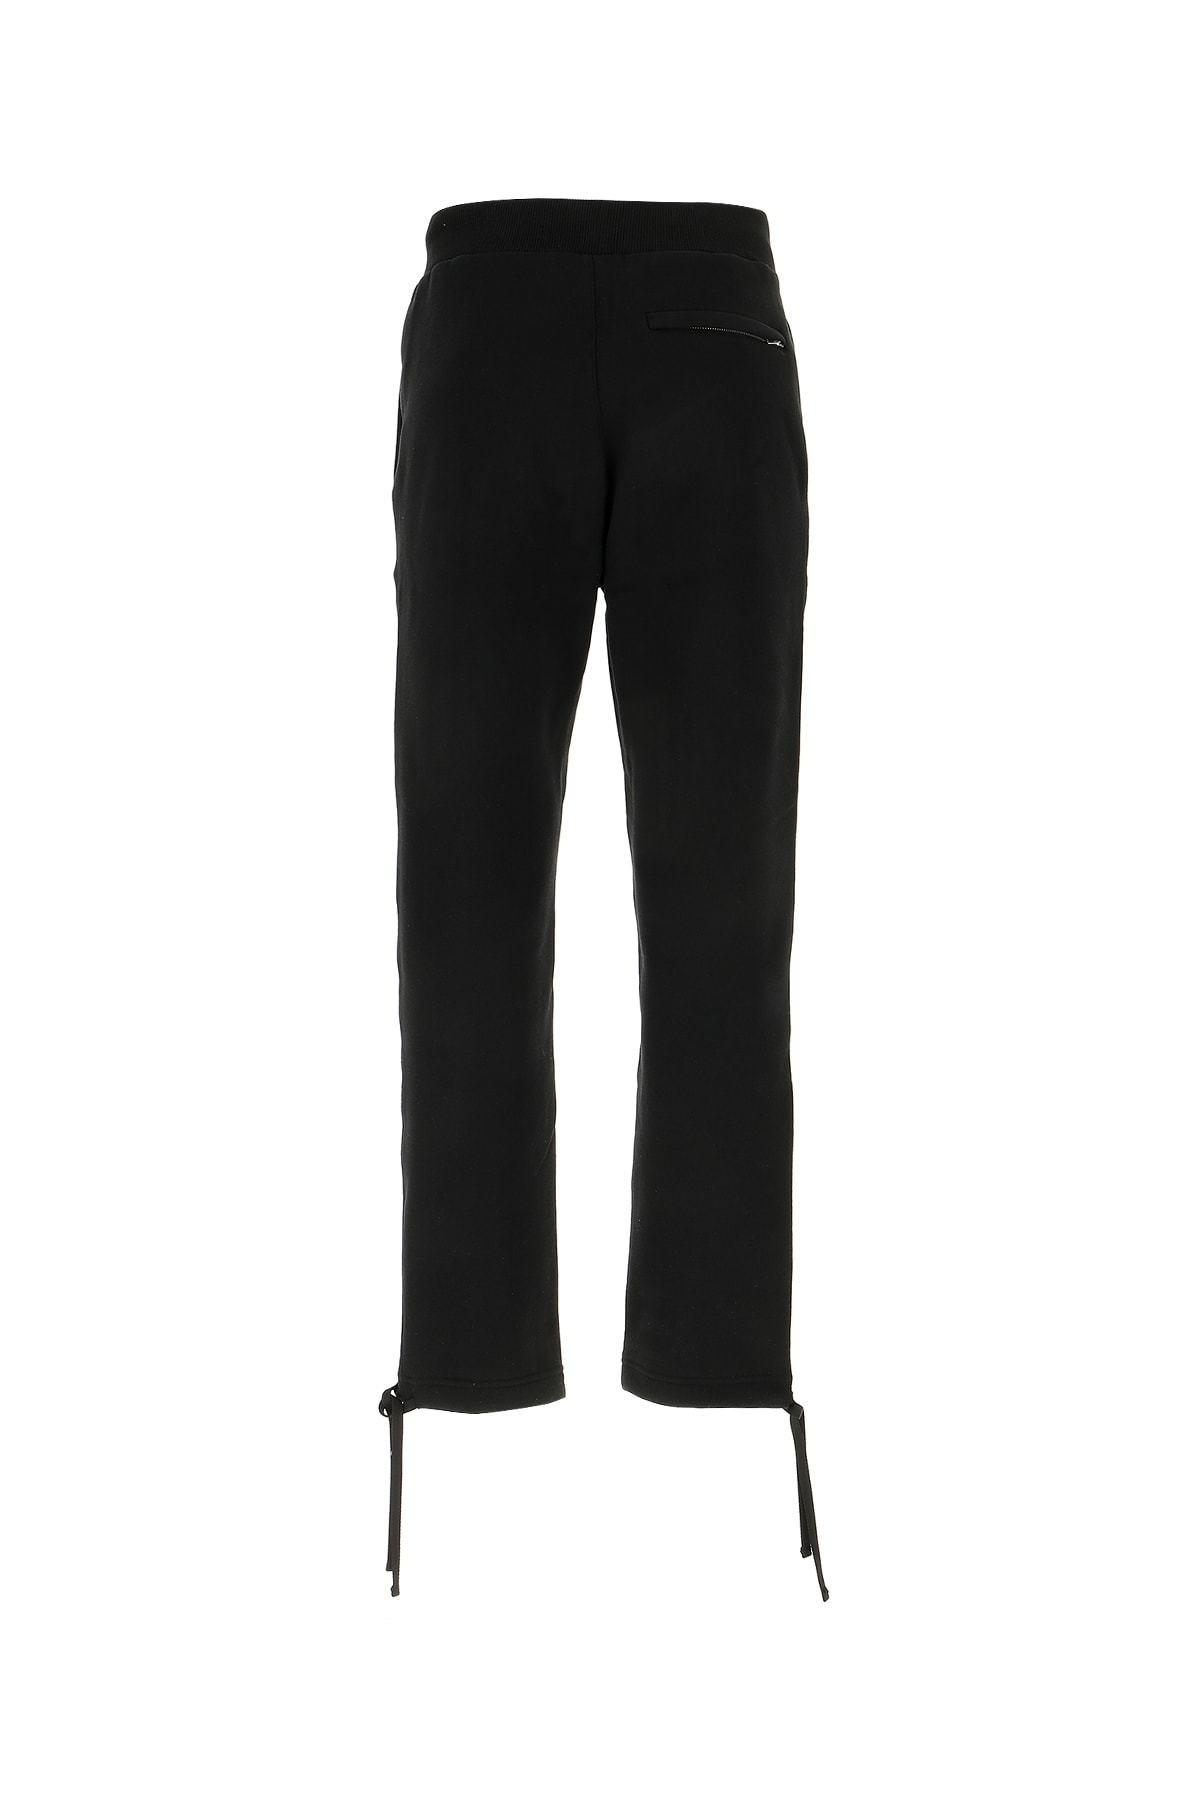 1017 ALYX 9SM Cotton Drawstring Sweatpants in Black for Men - Lyst